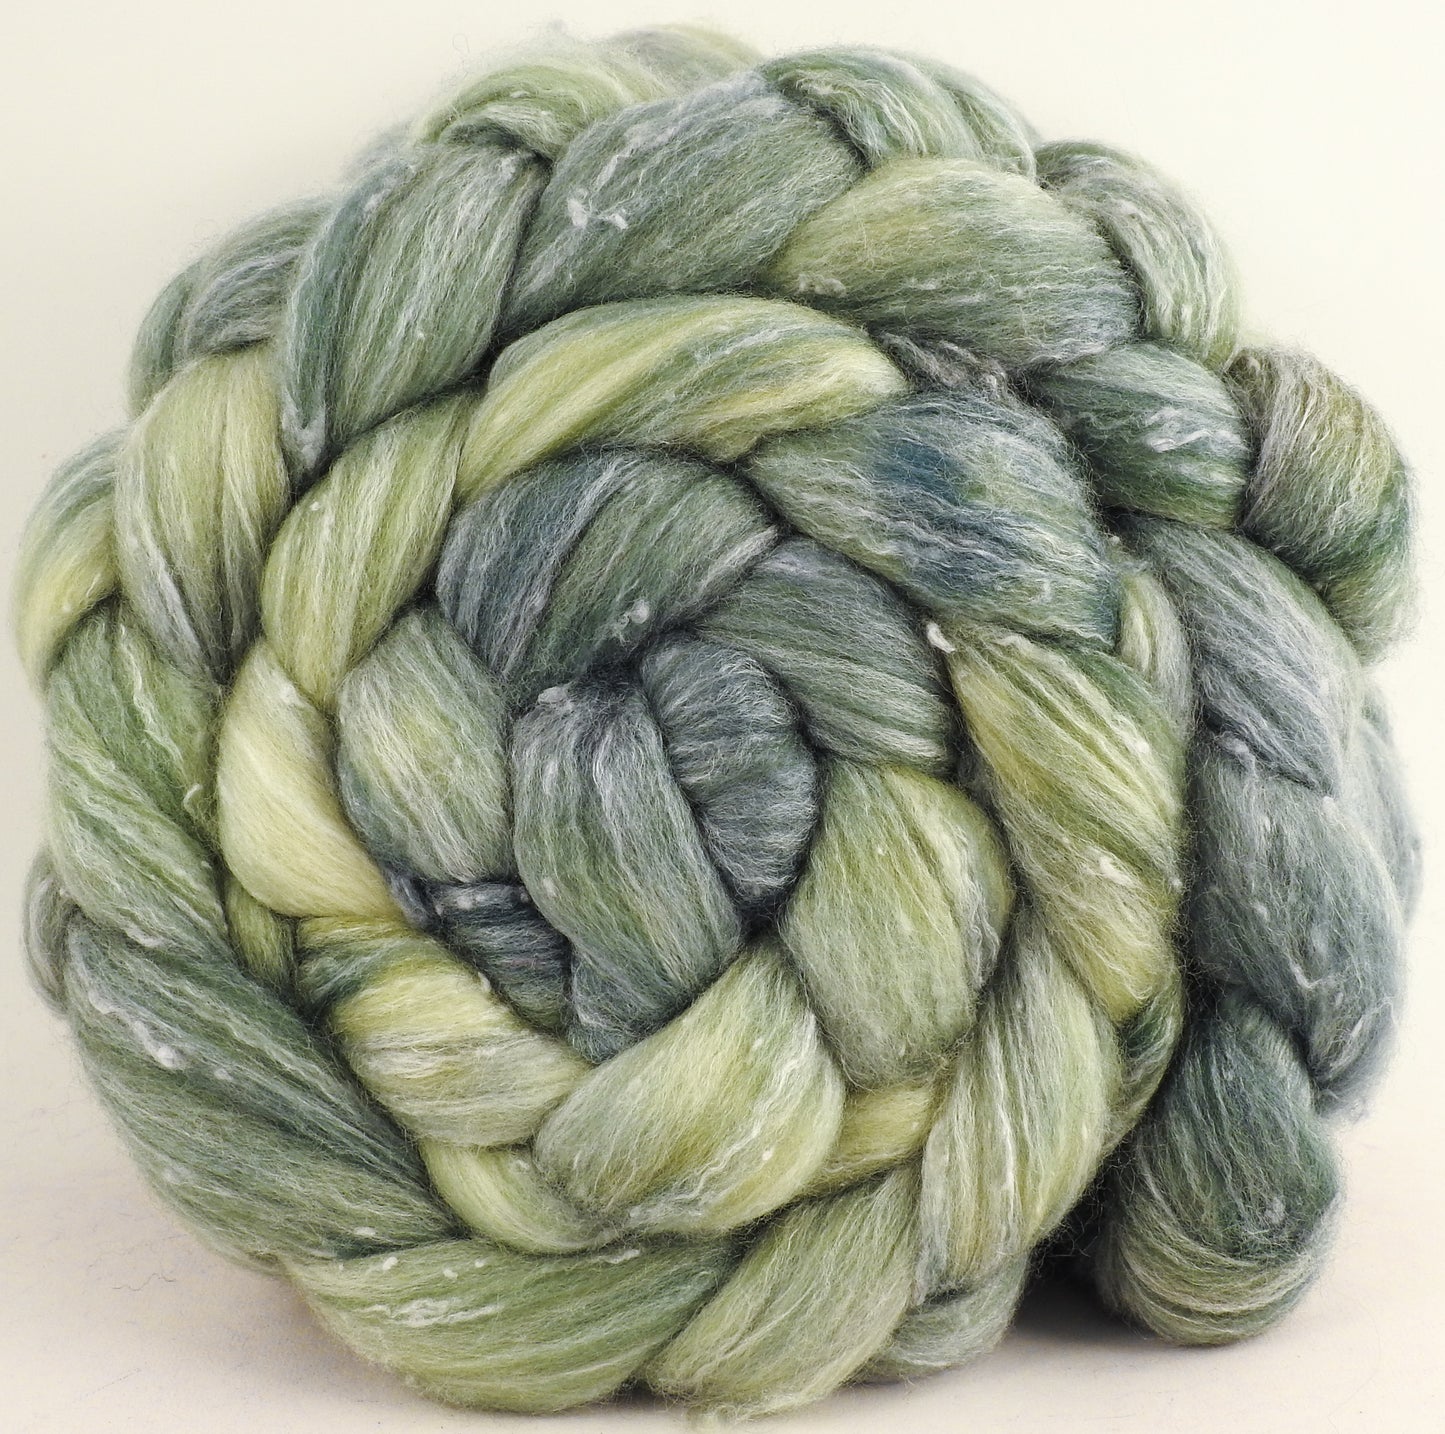 Willow - Merino/ Bamboo/ Tweed Blend (⅓ each) - 6 oz